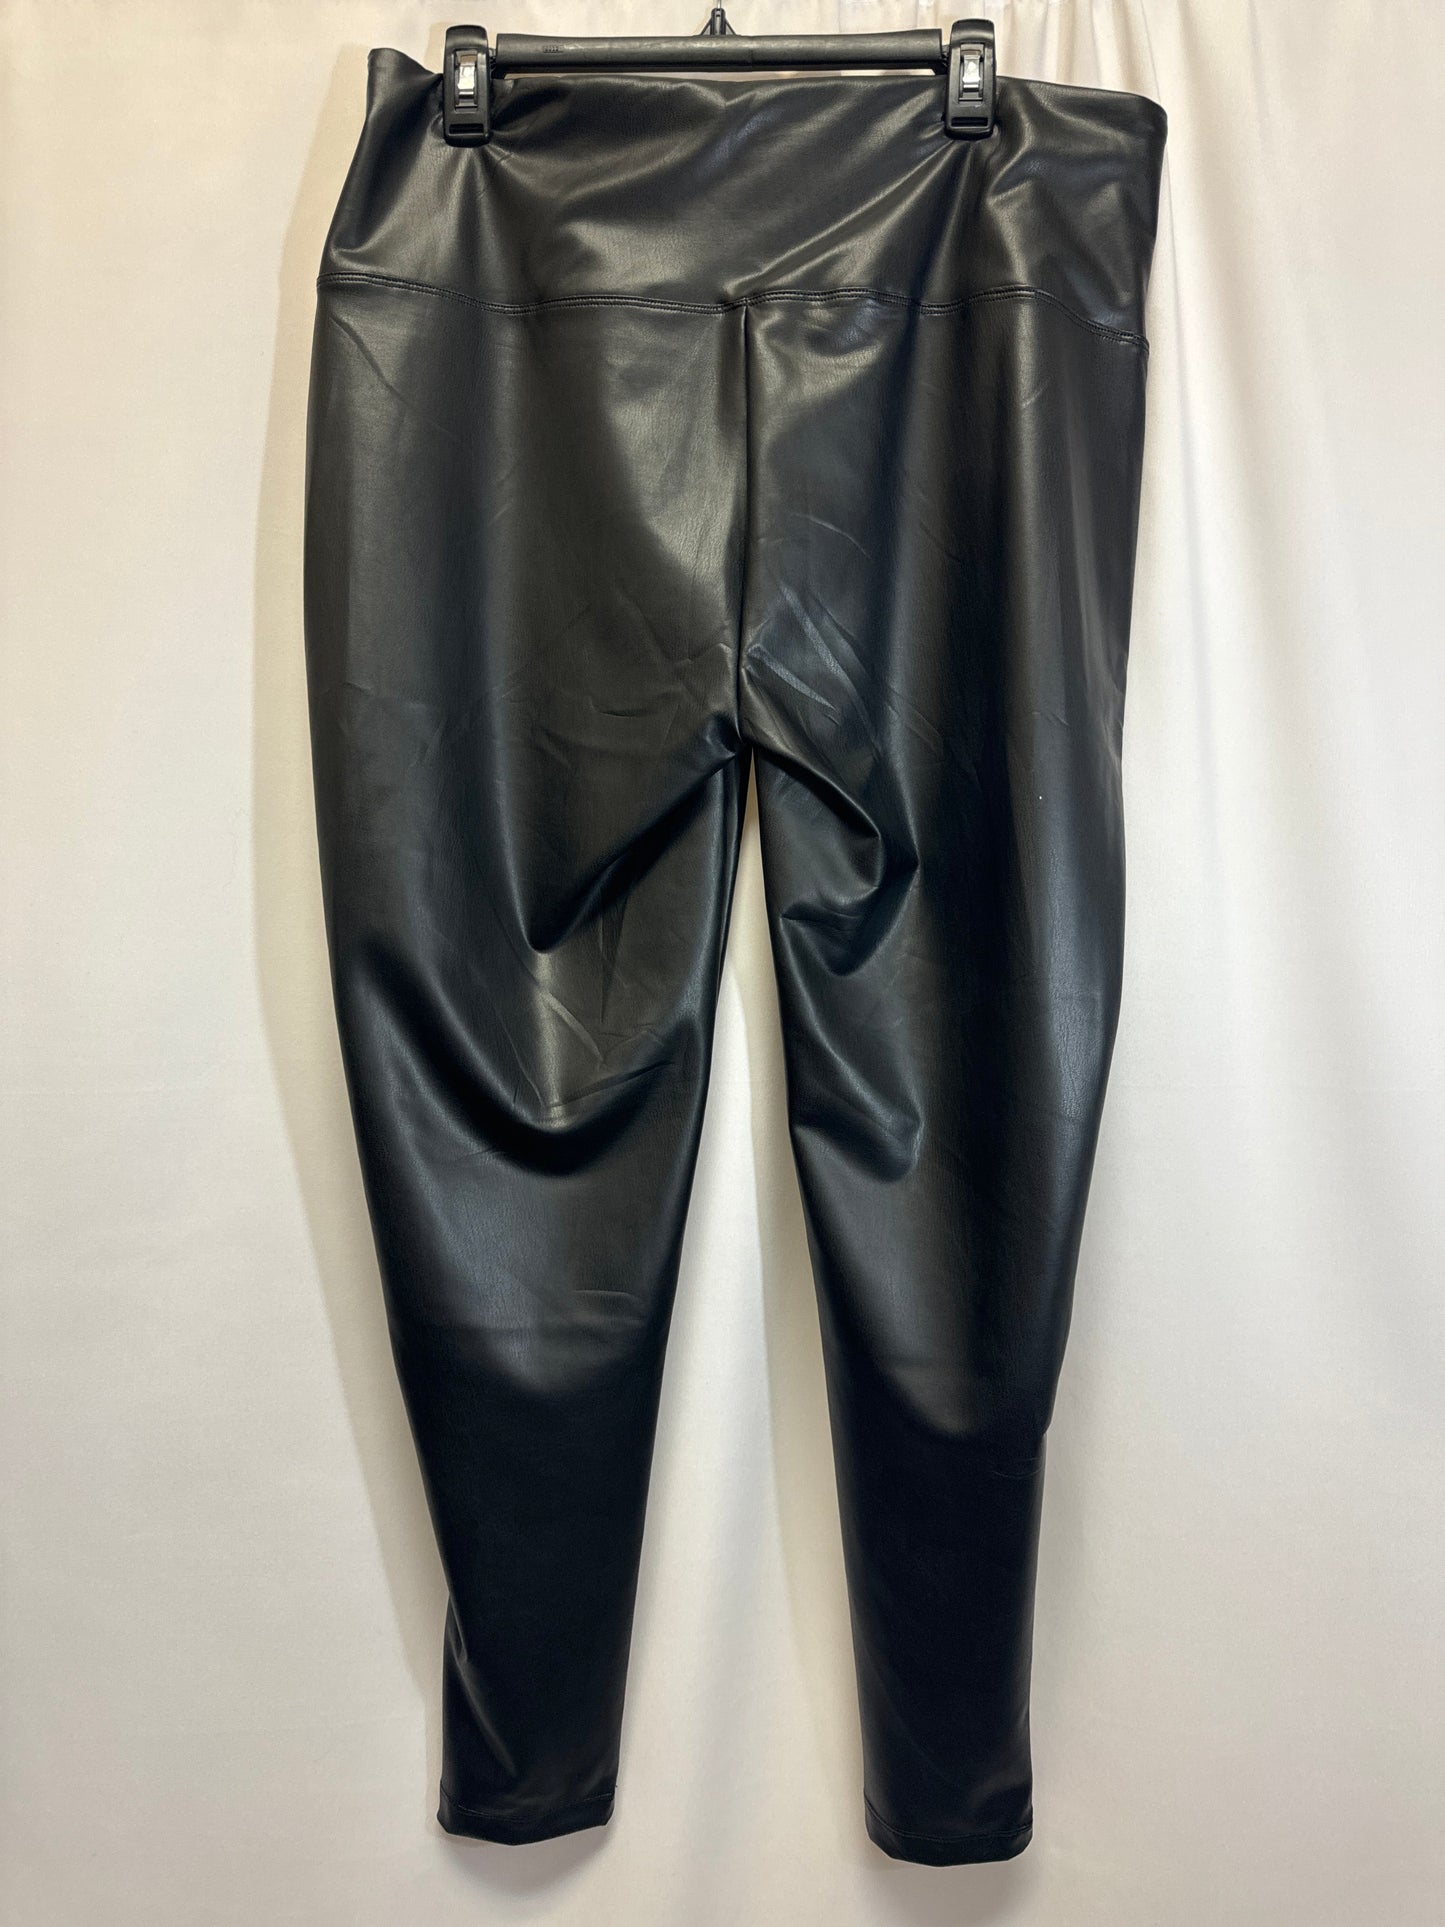 Black Pants Leggings Zenana Outfitters, Size 3x